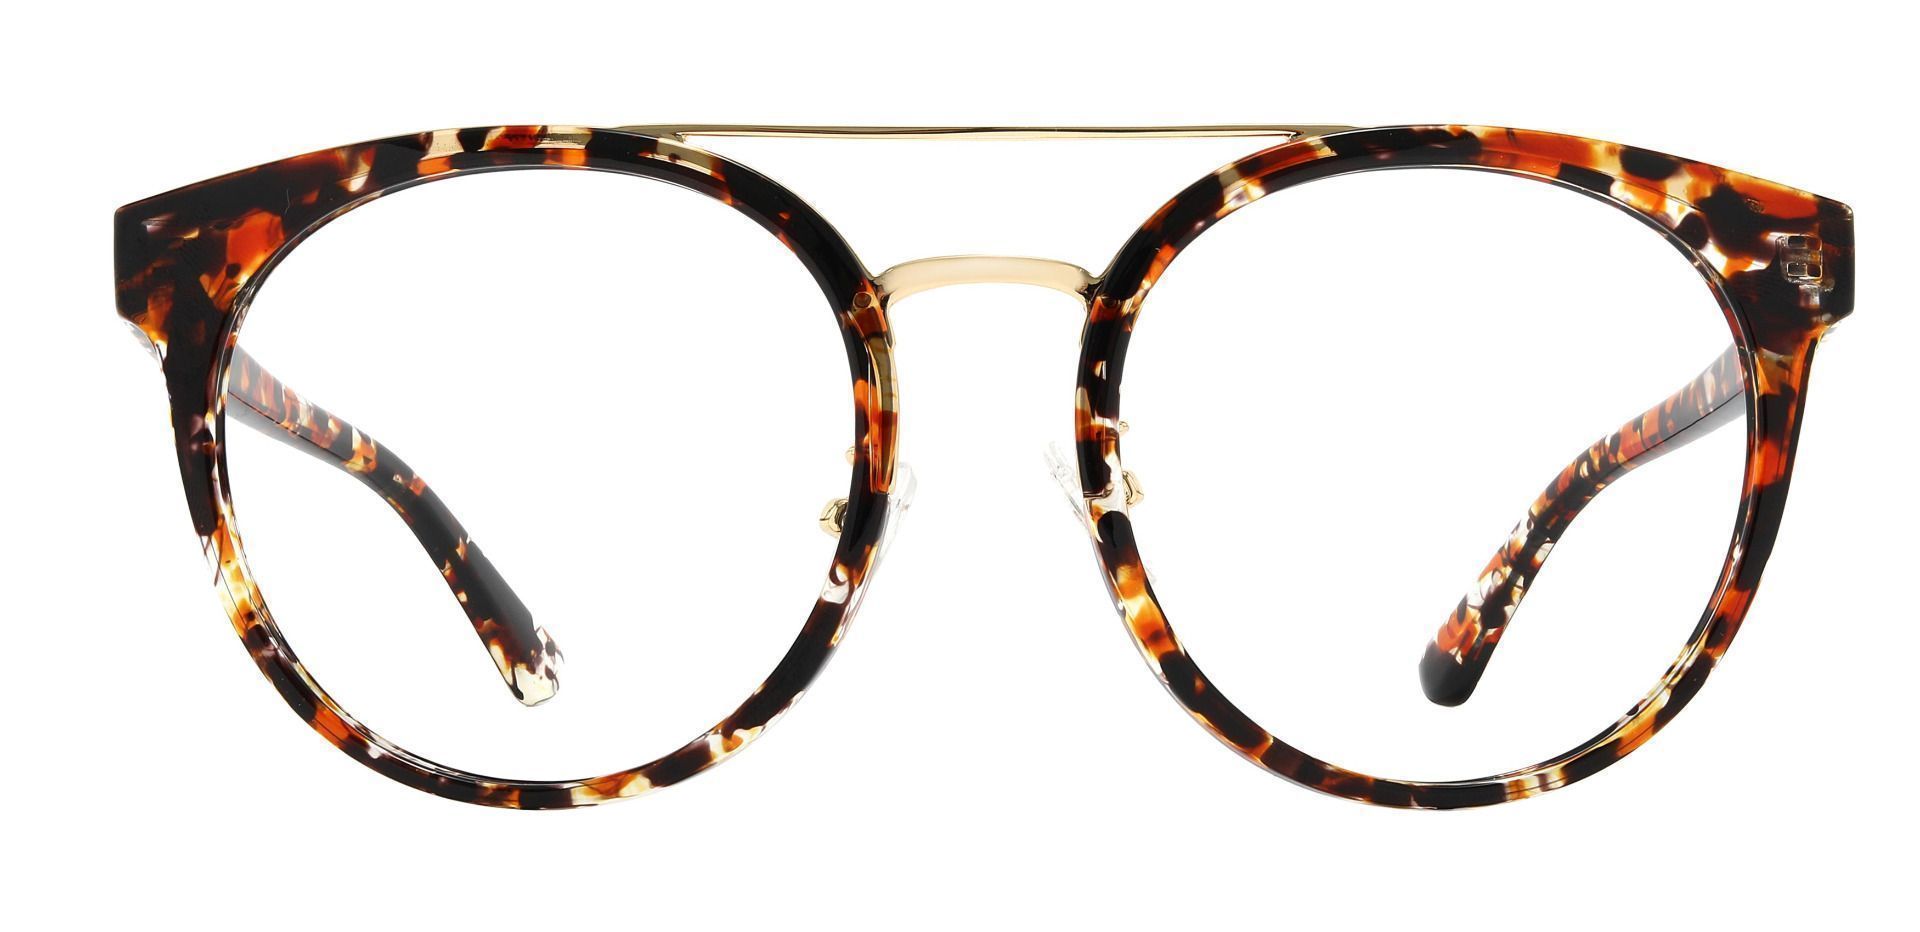 Oasis Aviator Prescription Glasses - Tortoise